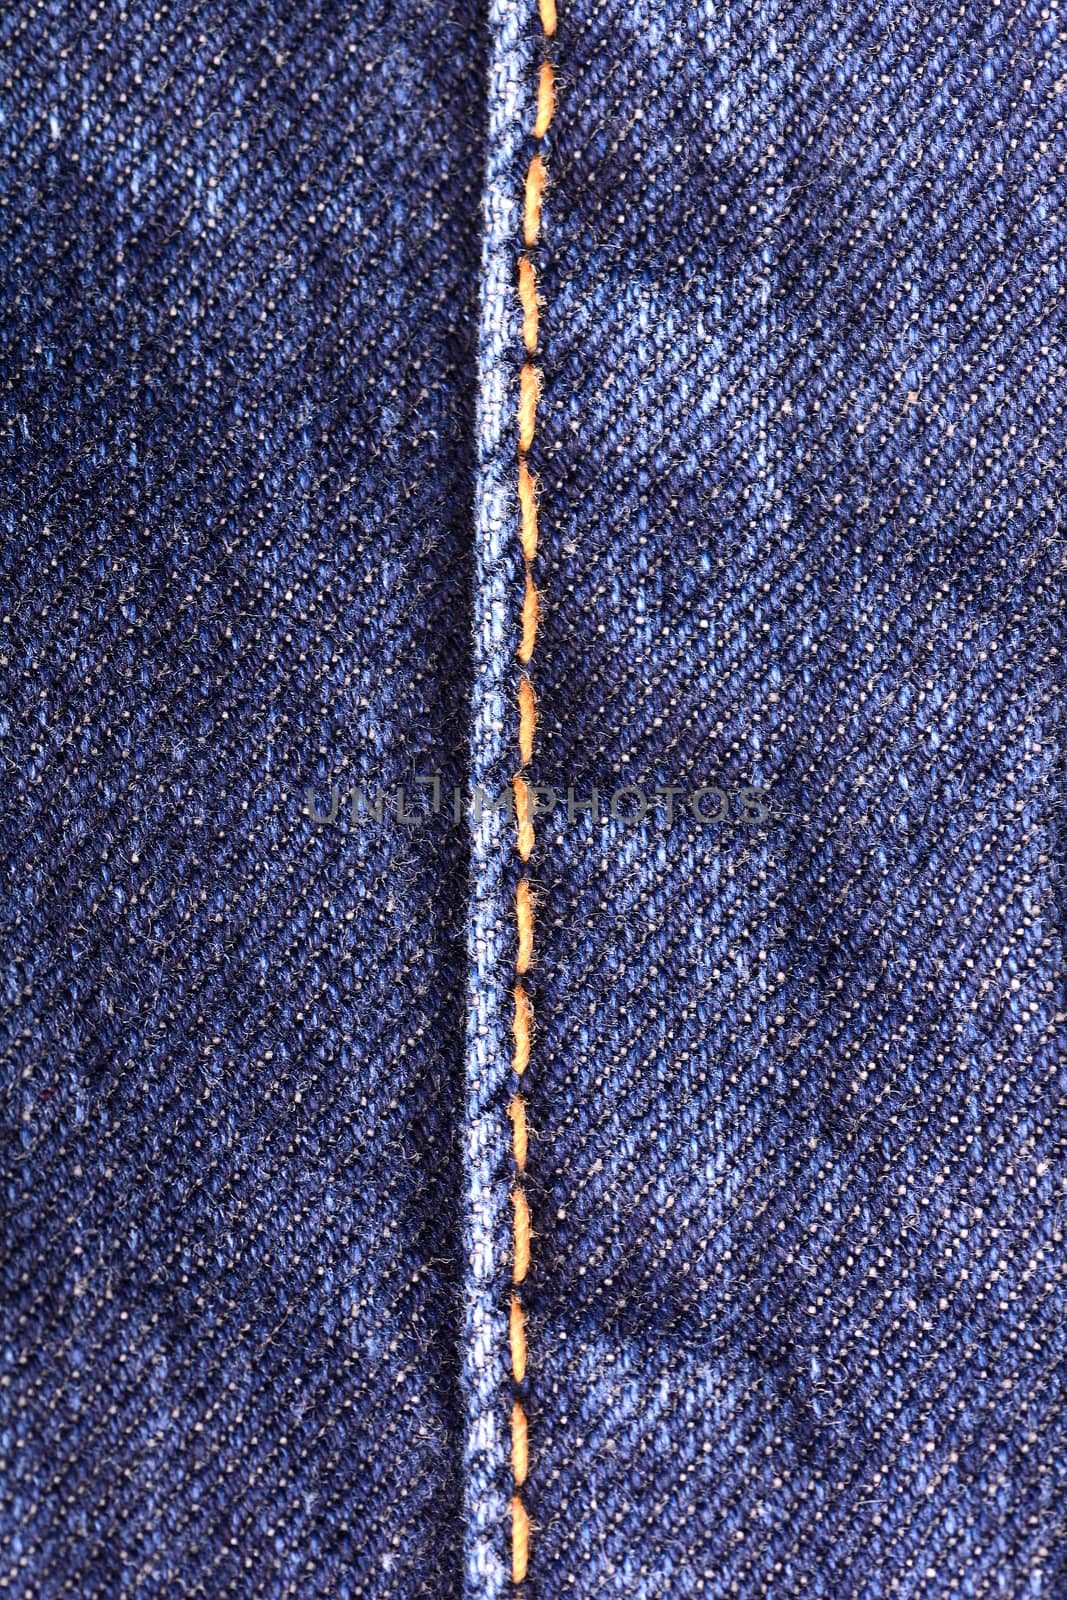 denim jeans background with seam of jeans fashion design. Old grunge vintage denim jean